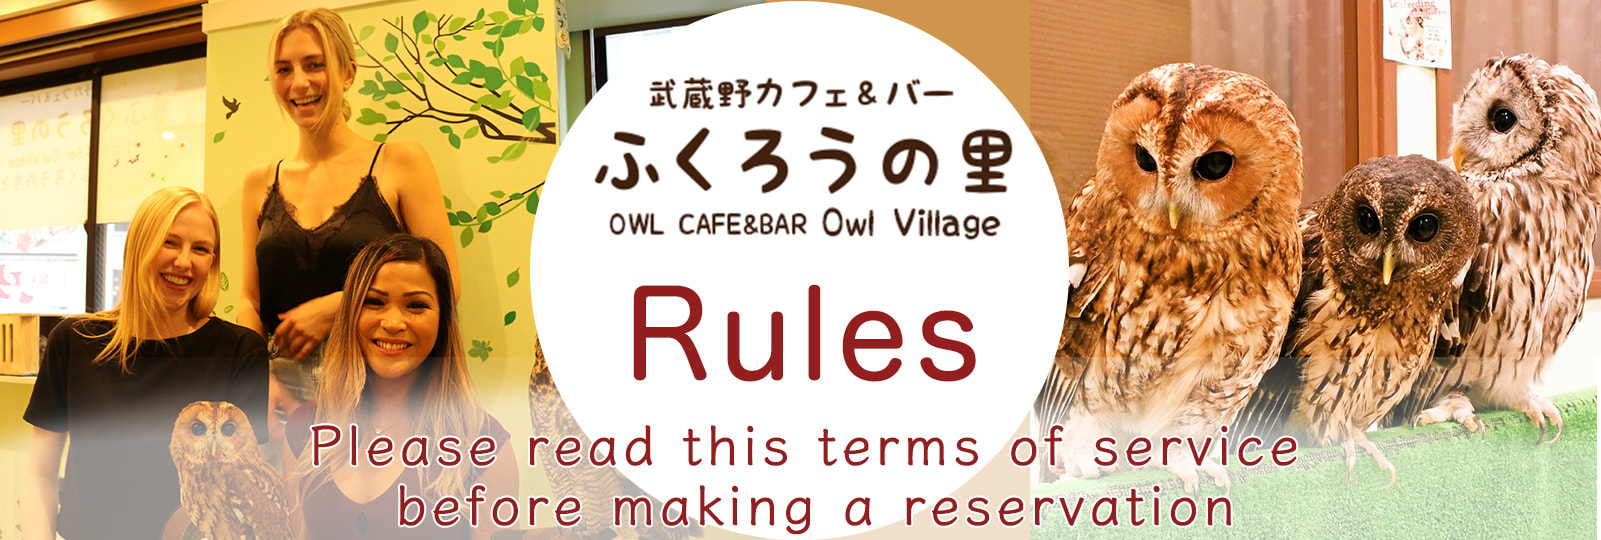 owl cafe harajuku about rules-1